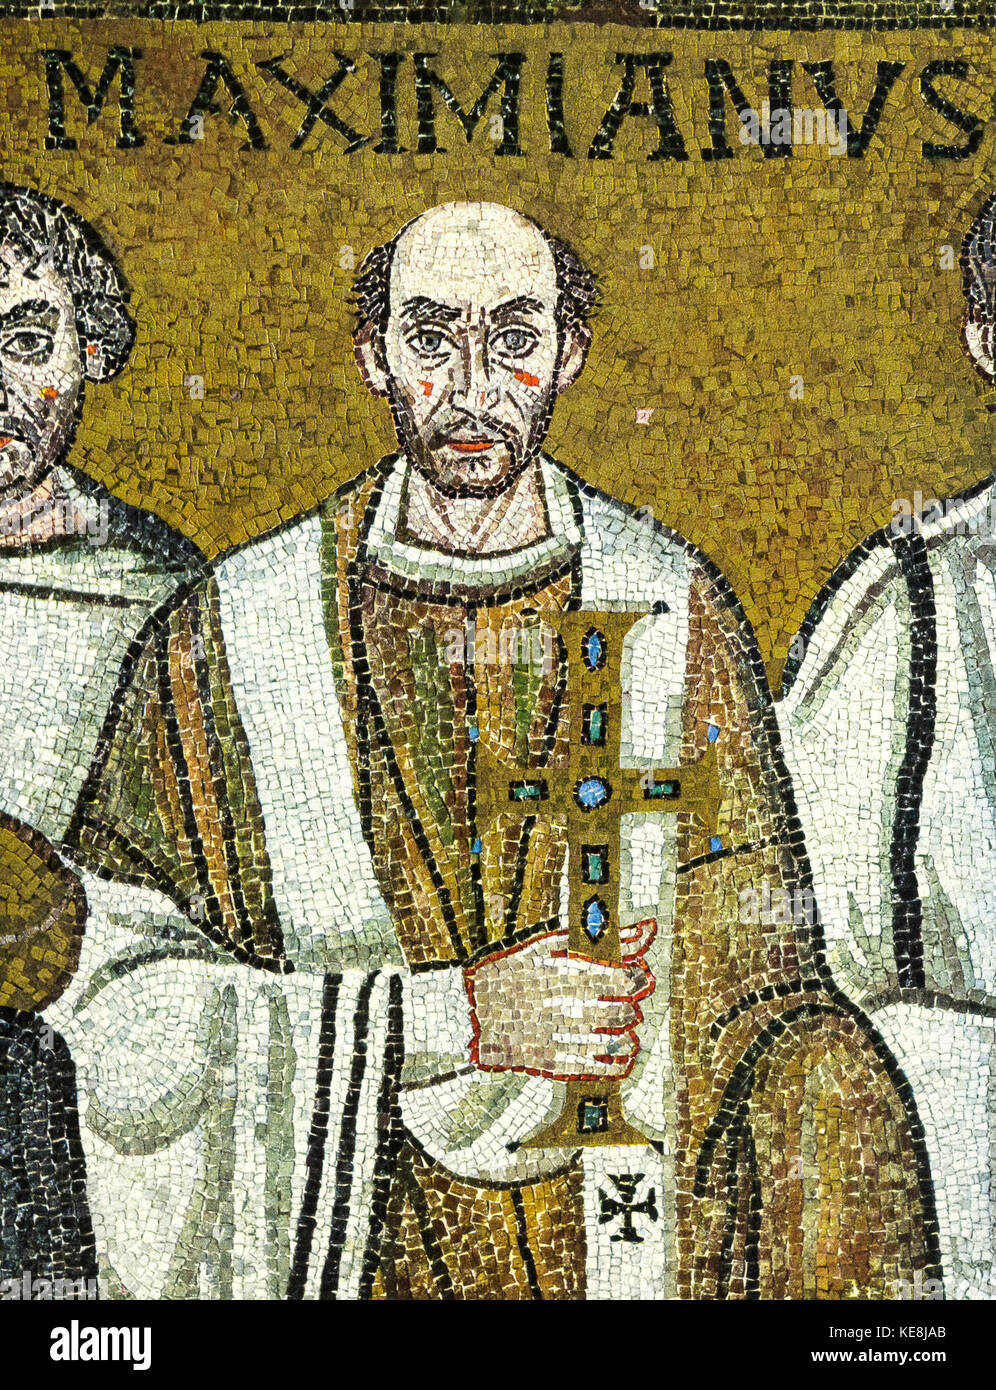 Italien Emilia Romagna ravenna Basilika Saint vitale Chor Mosaik - Erzbischof maximian - Fahrrad-route Mosaik der Kaiser Justinian und seinen Hof - vor 547 Stockfoto